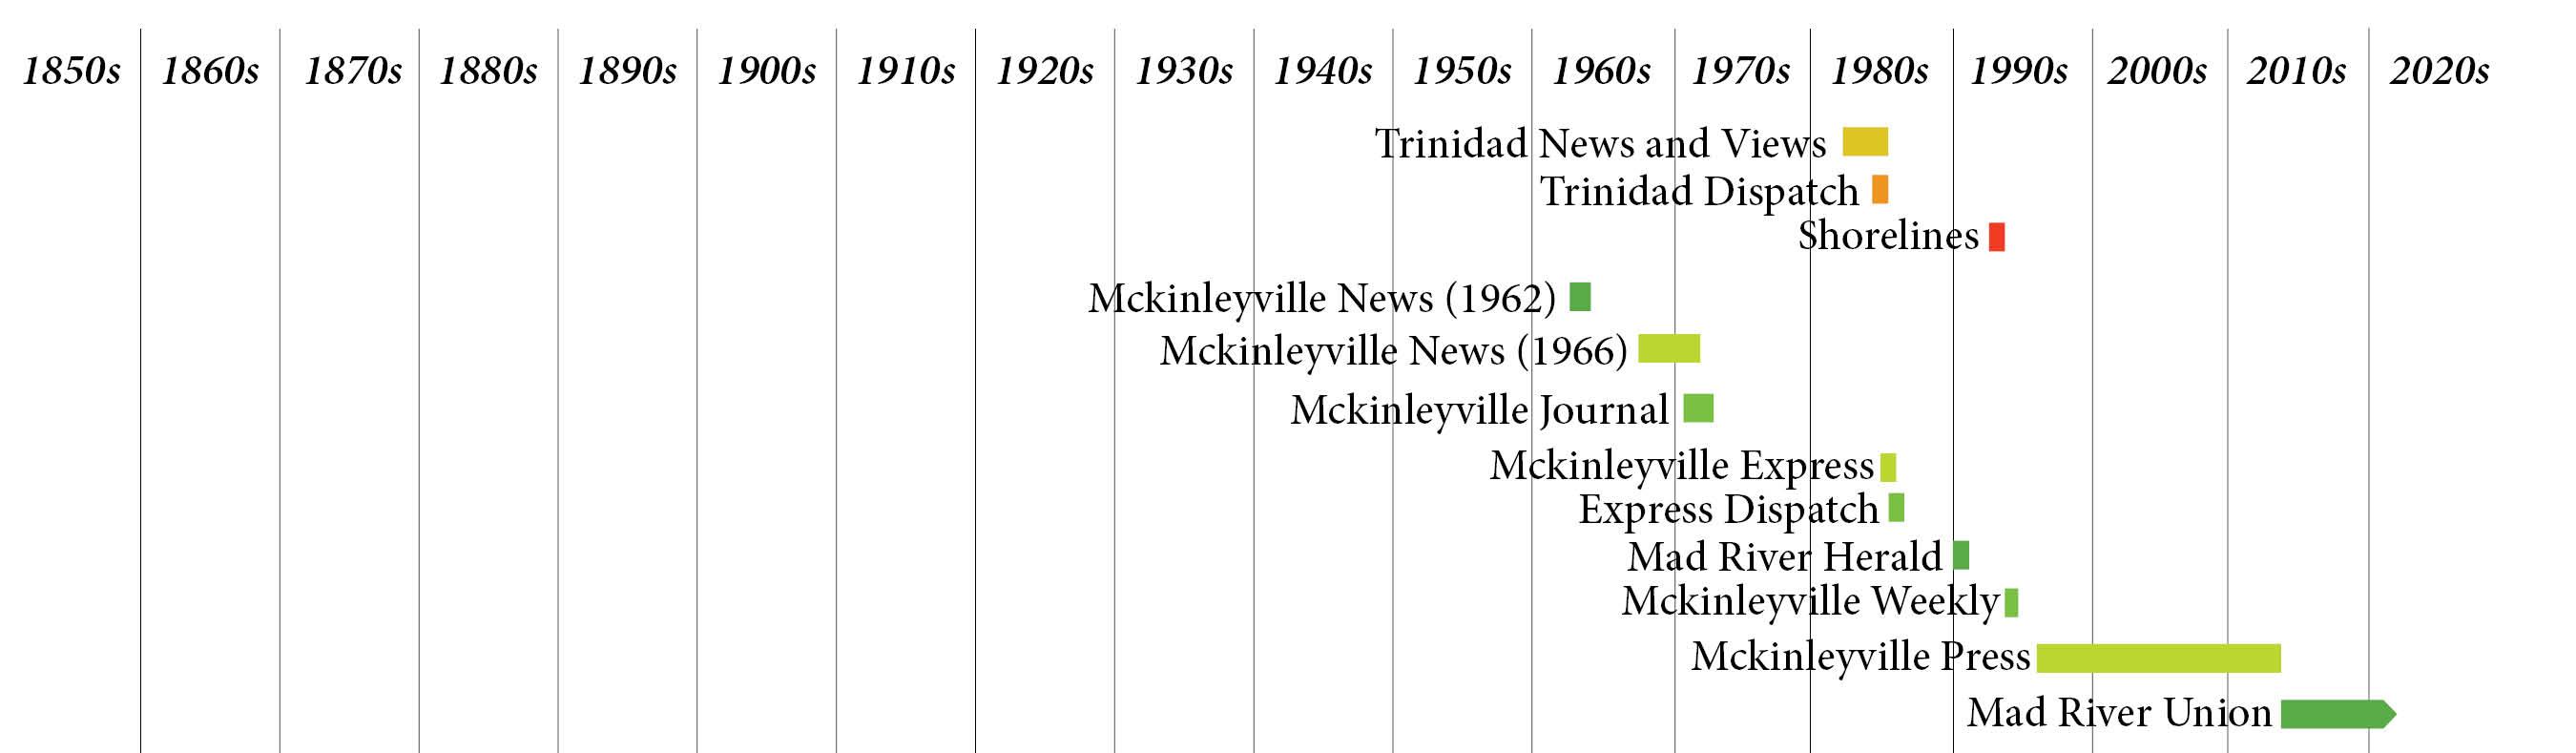 Timeline of Trinidad and Mckinleyville newspapers